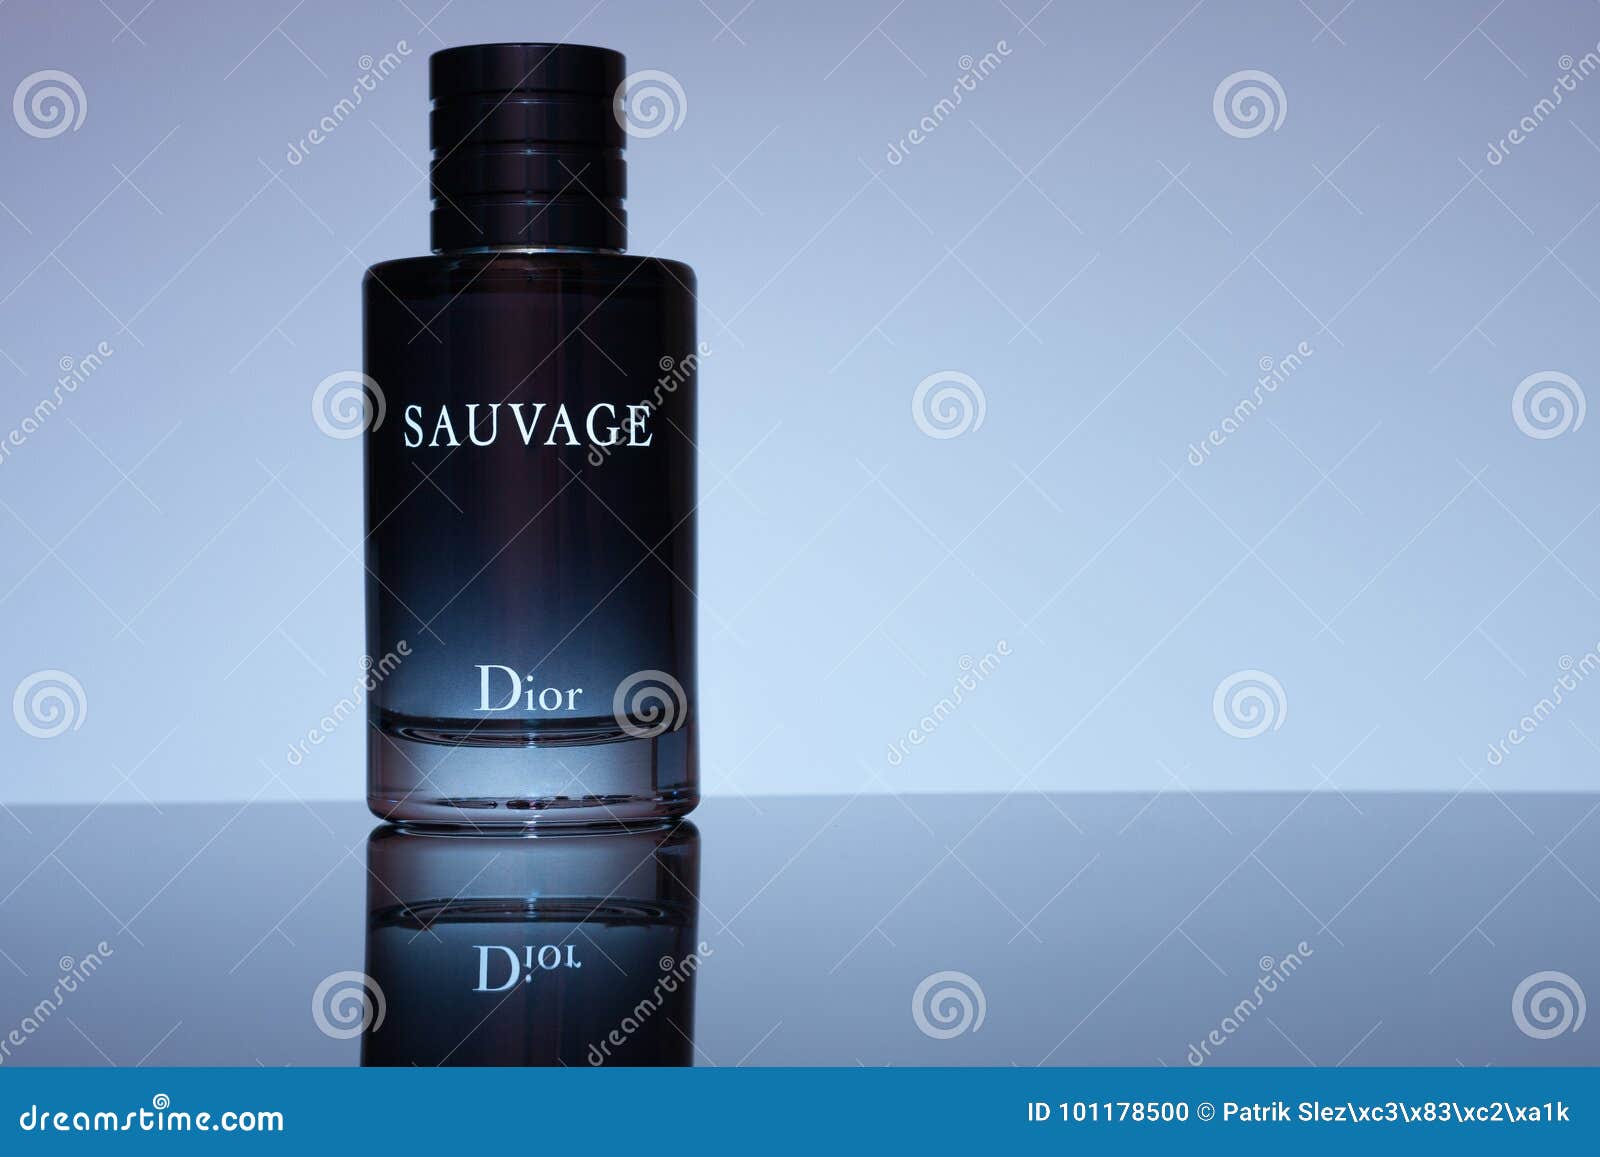 dior sauvage 2017